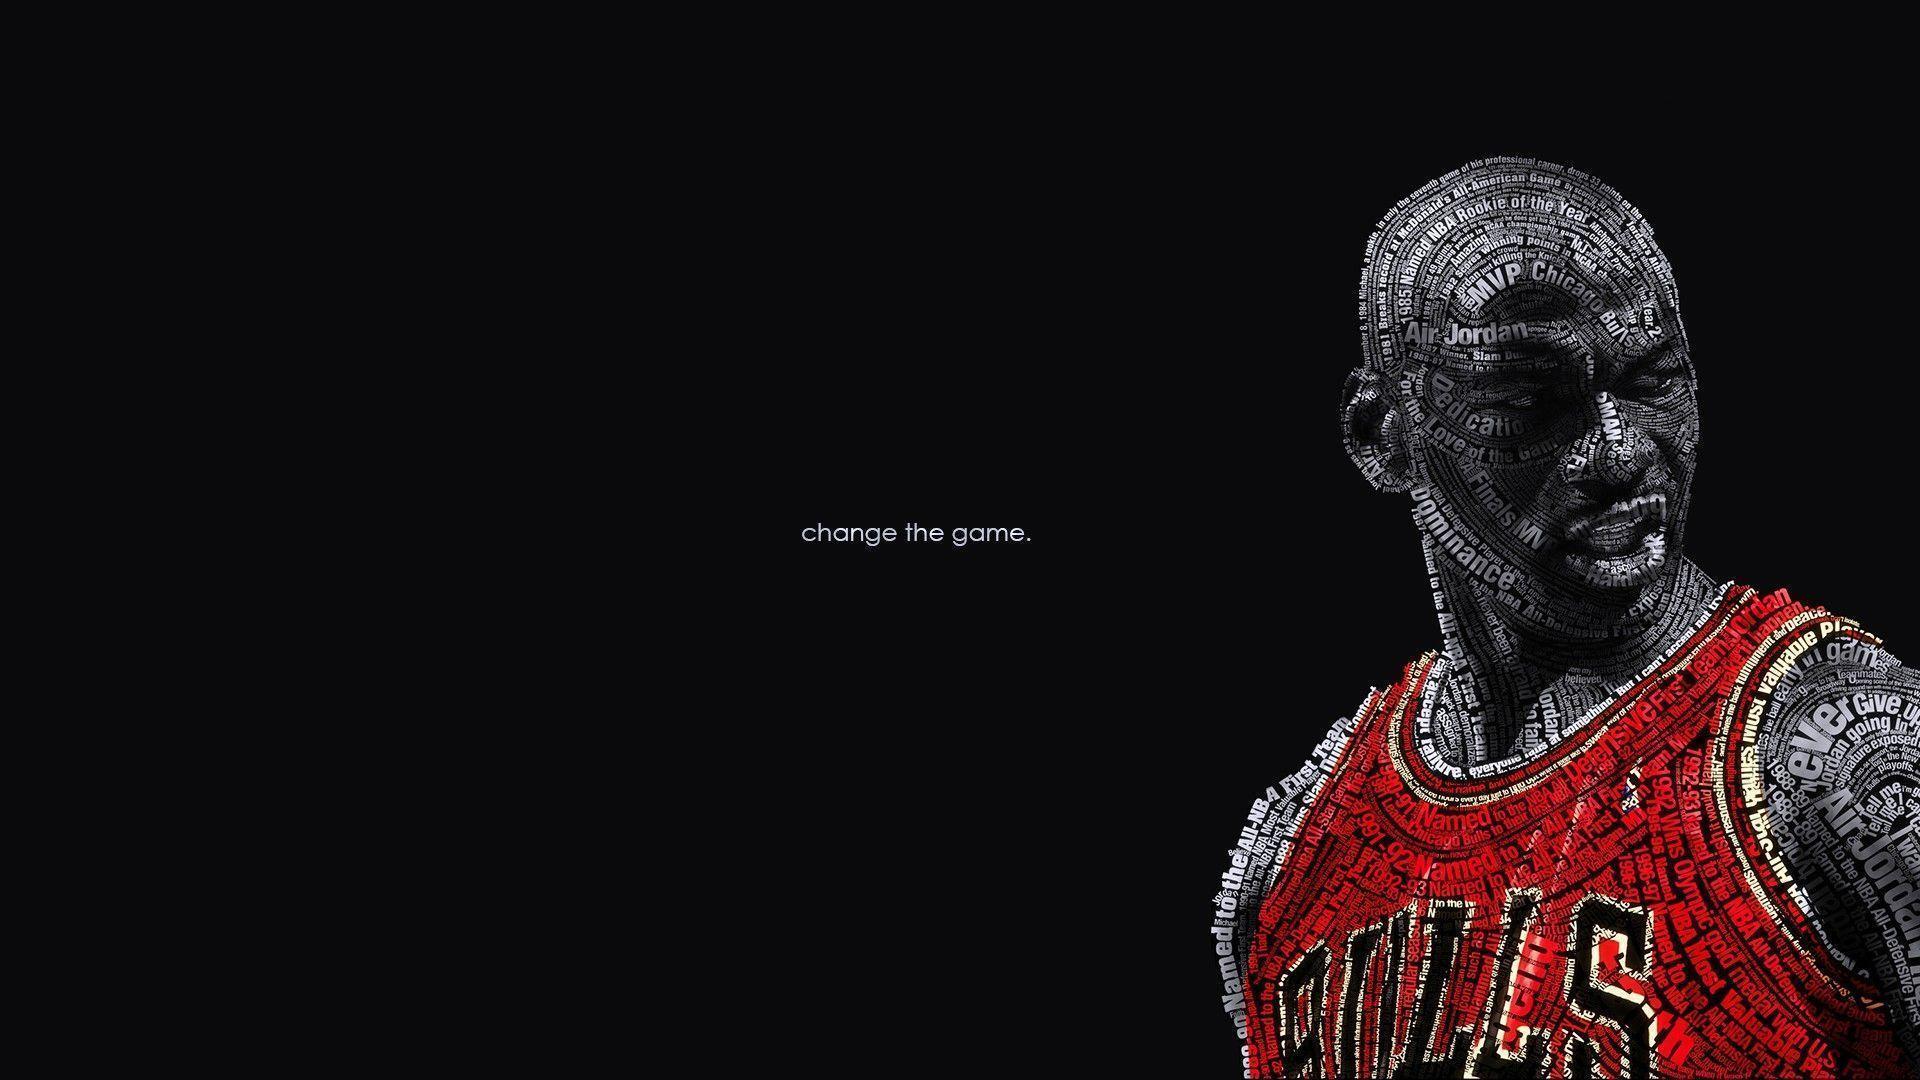 Michael Jordan Ipad Wallpapers